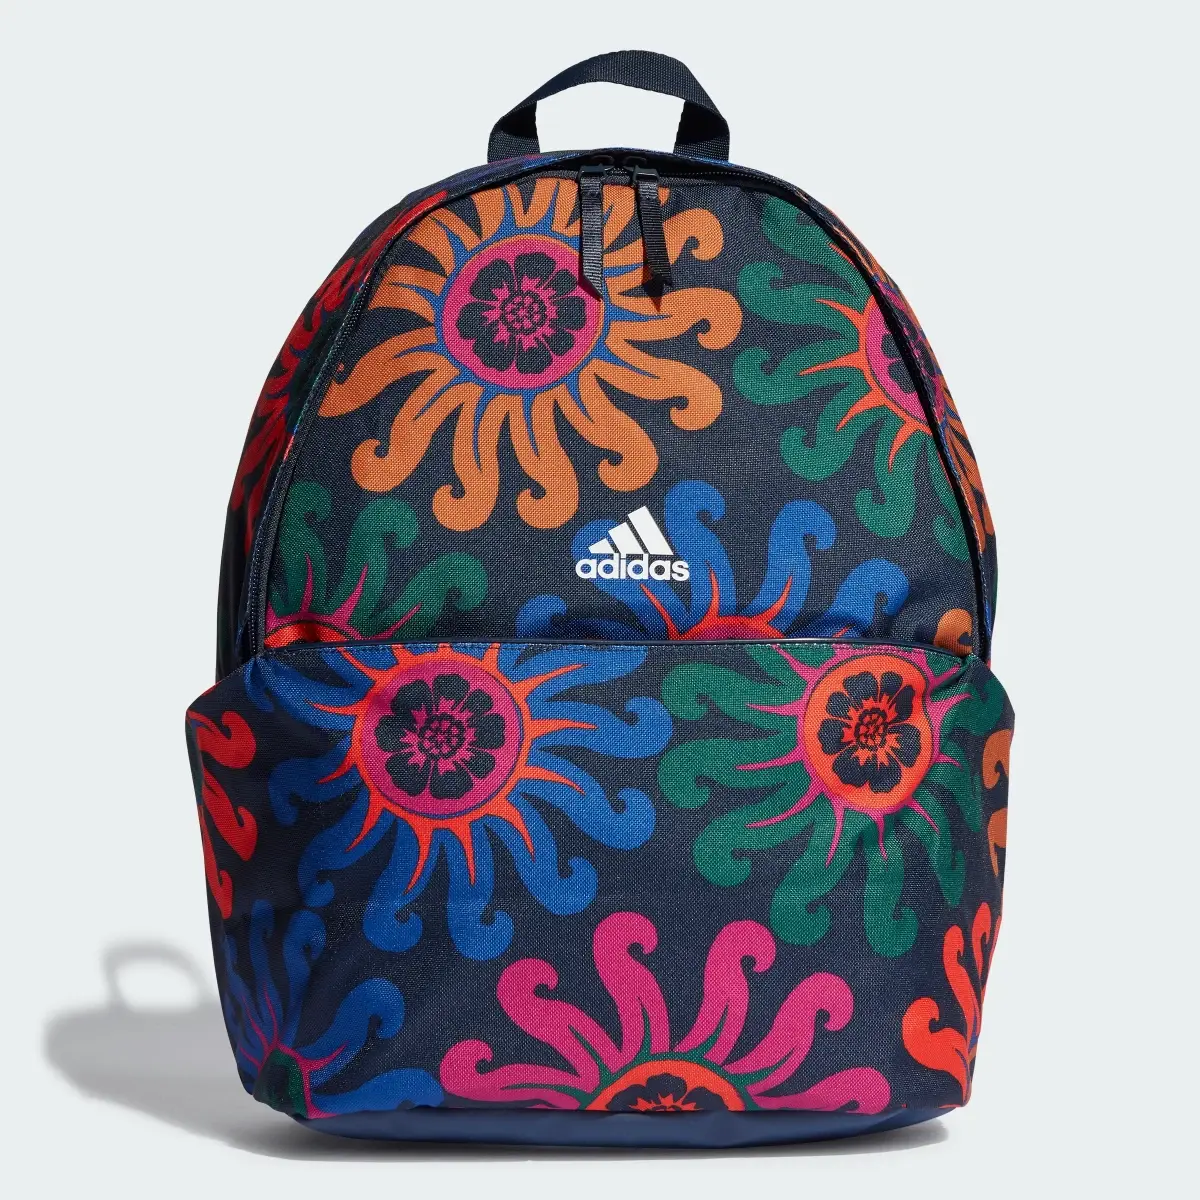 Adidas x FARM Backpack. 1